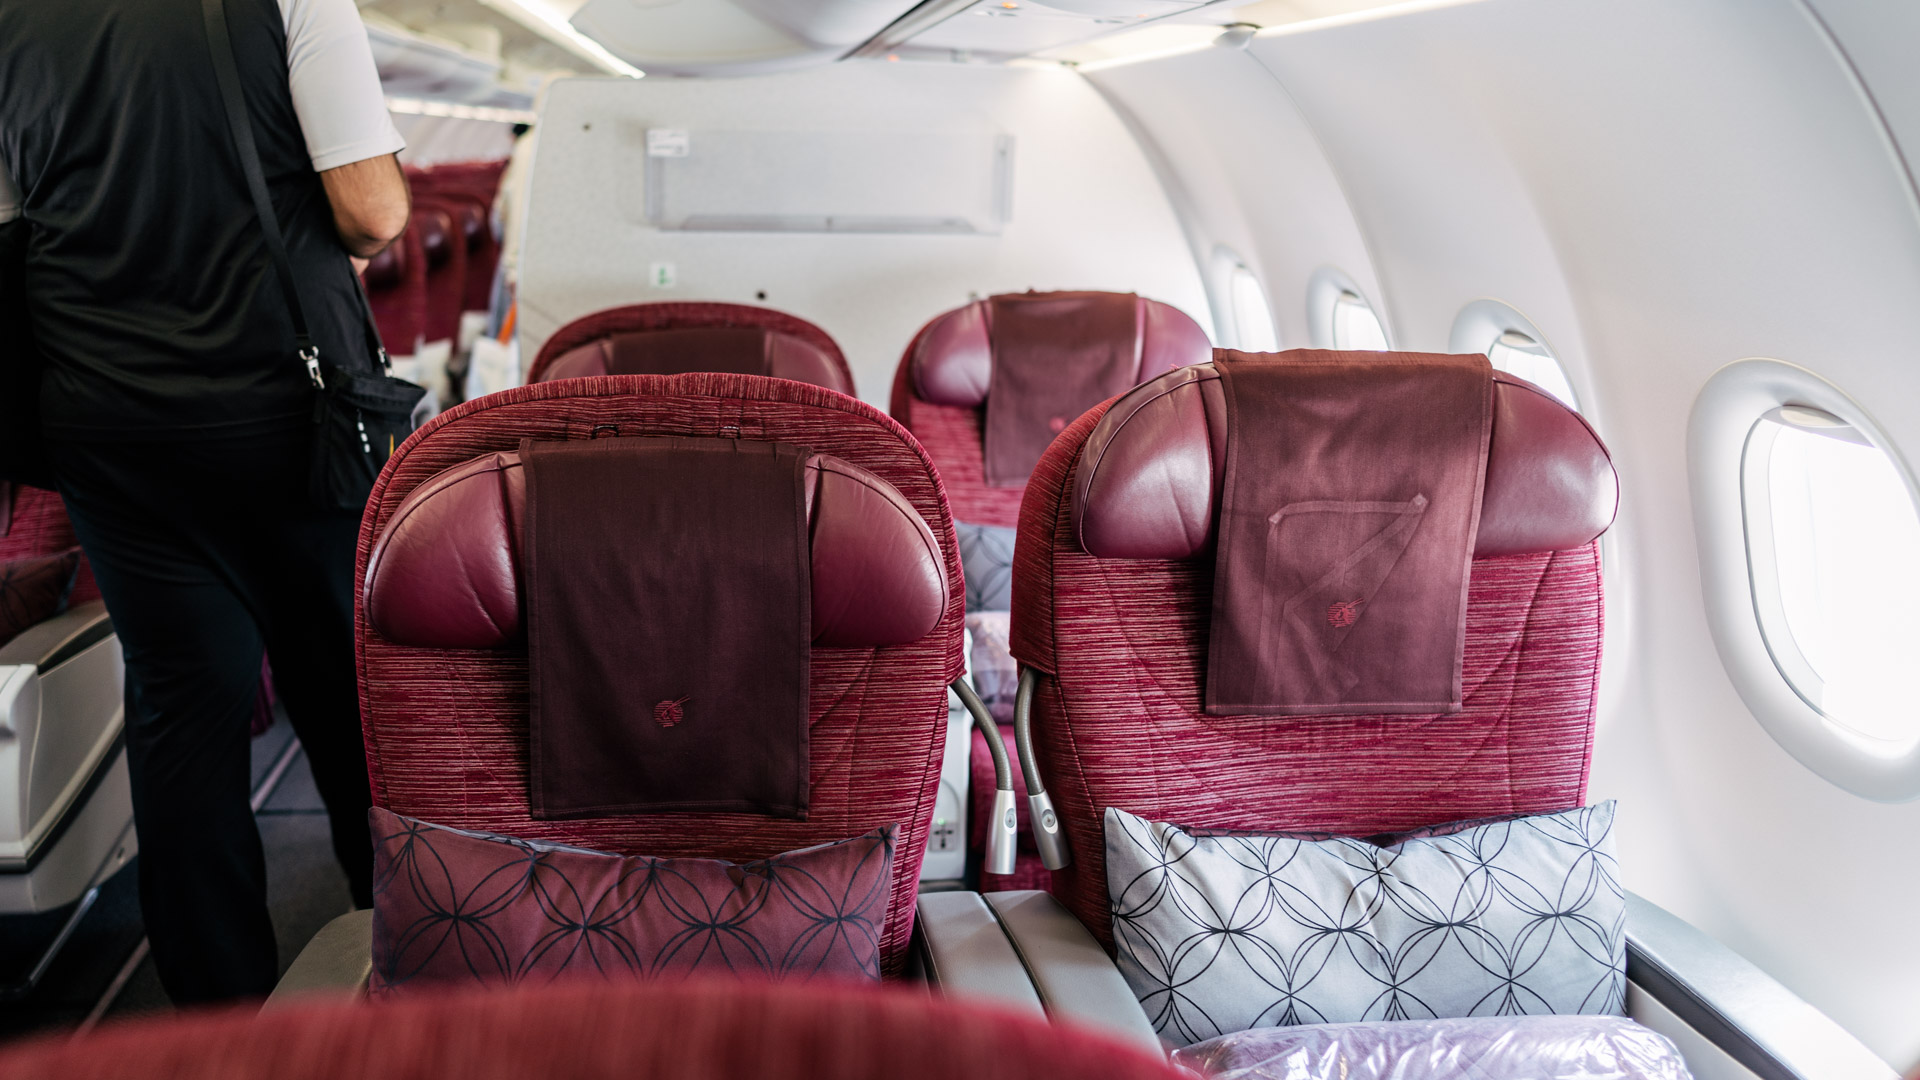 Qatar Airways A320 First Class headrest.